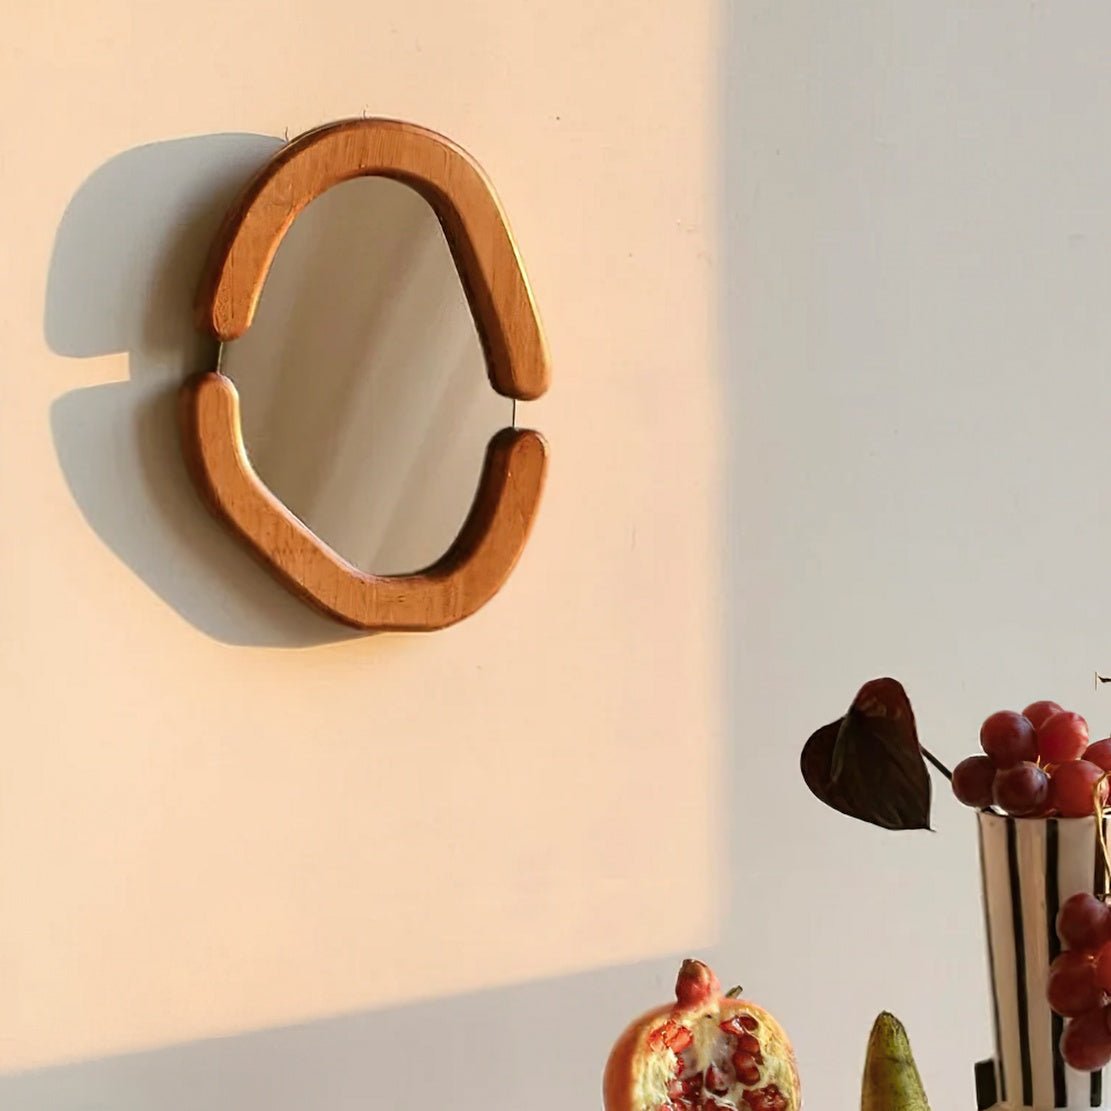 Asymmetrical wooden frame decorative wall mirror